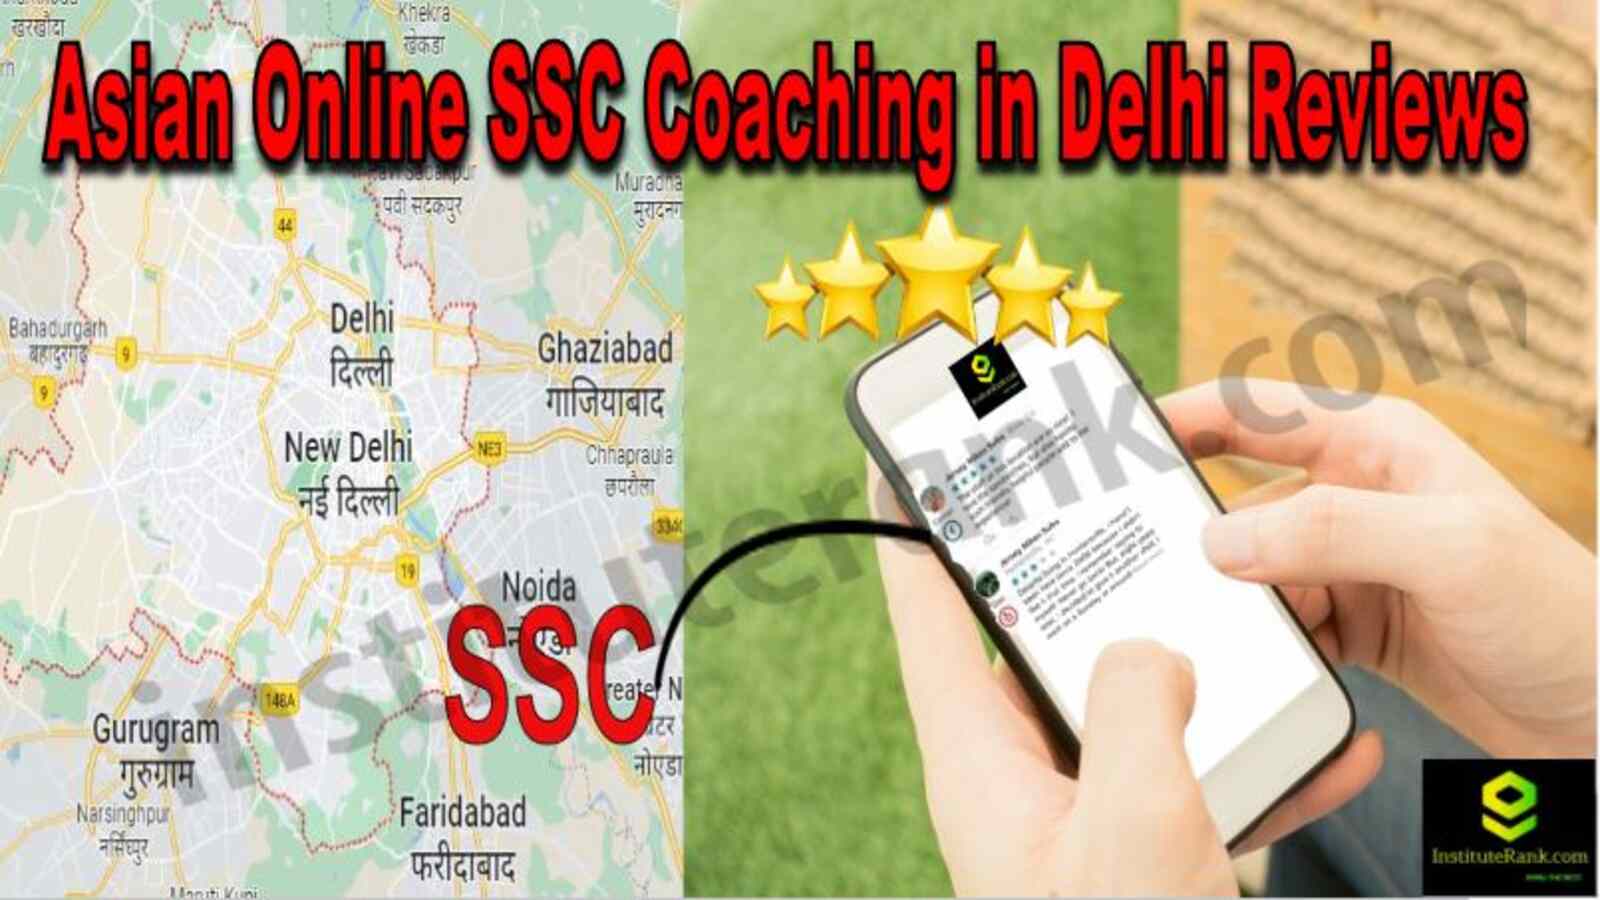 Asian Online SSC Coaching in Delhi Reviews